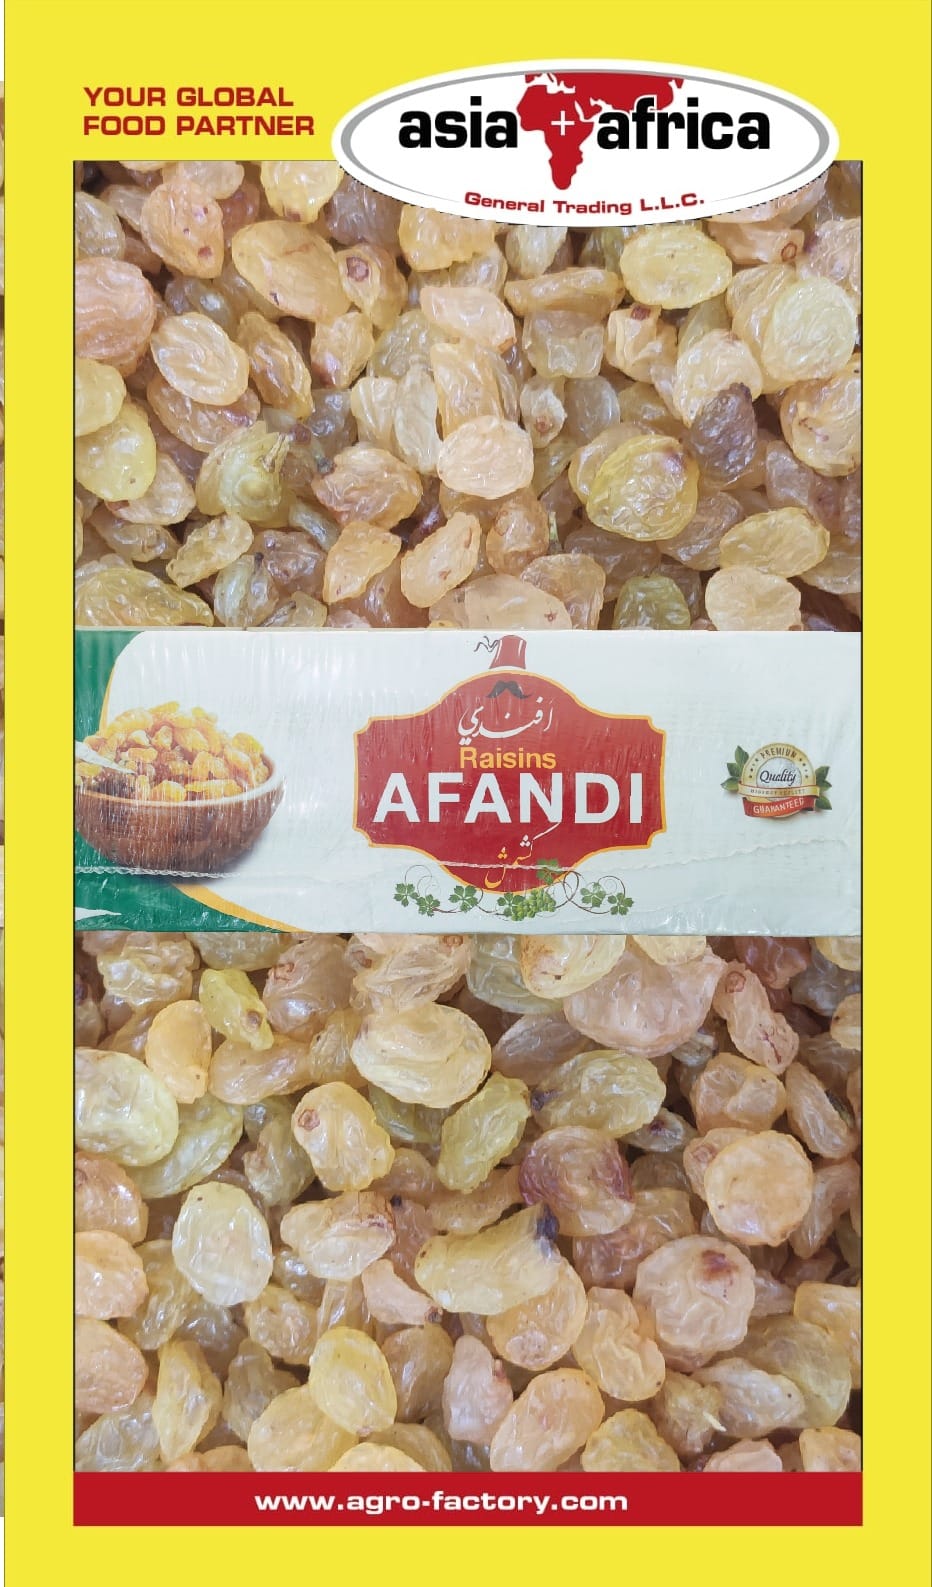 Afandi Raisins - Asia & Africa General Trading Dubai